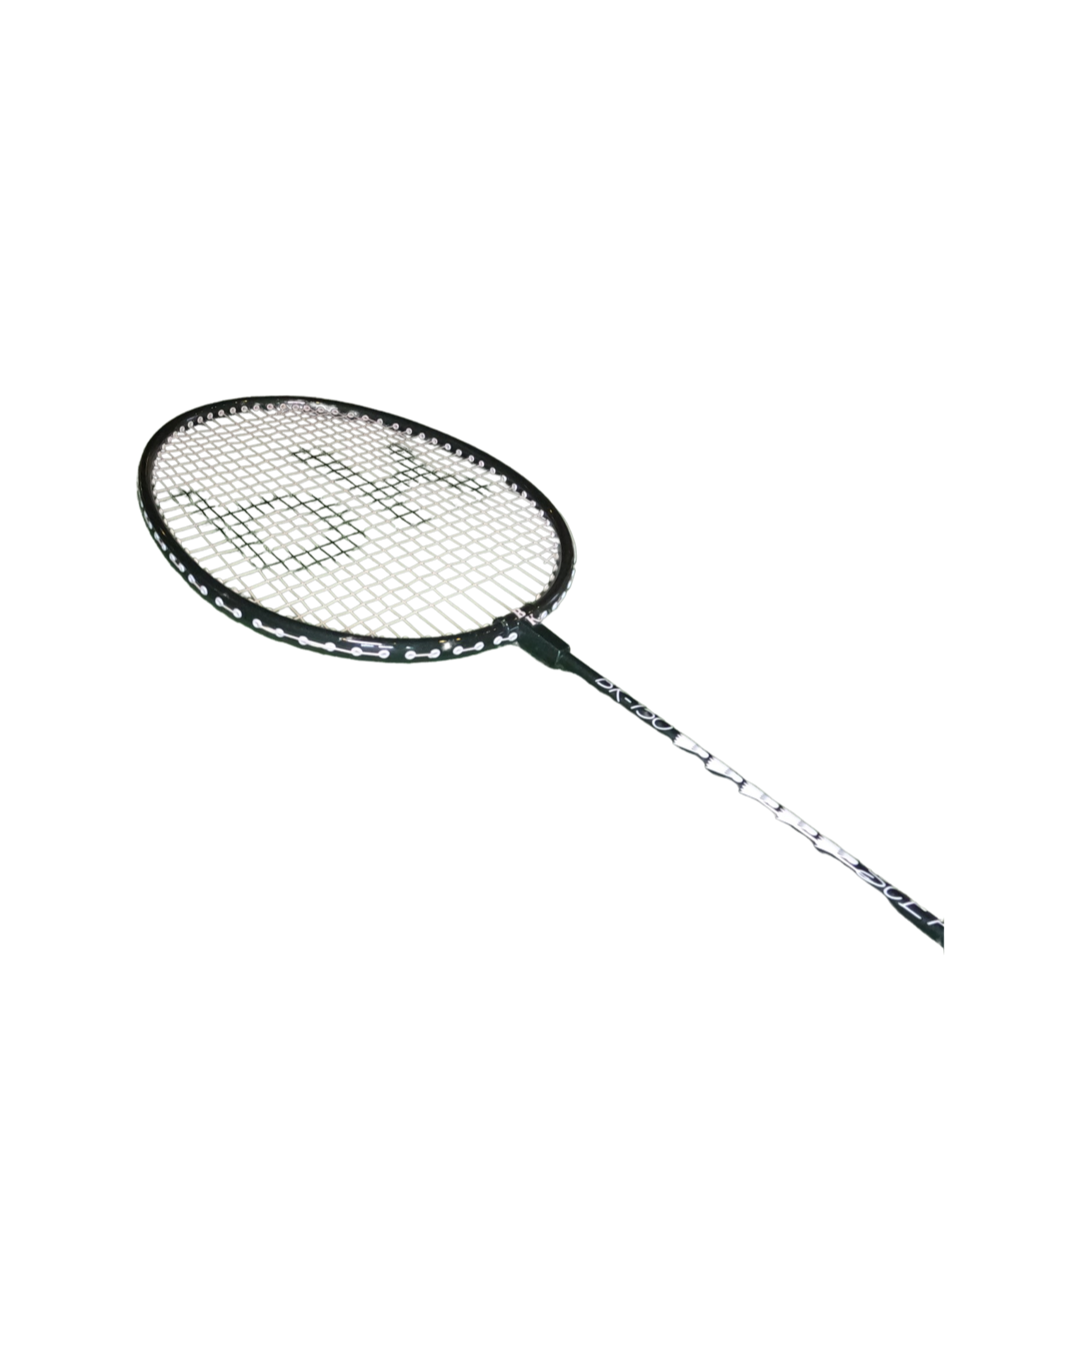 Black knight Badminton BK-150